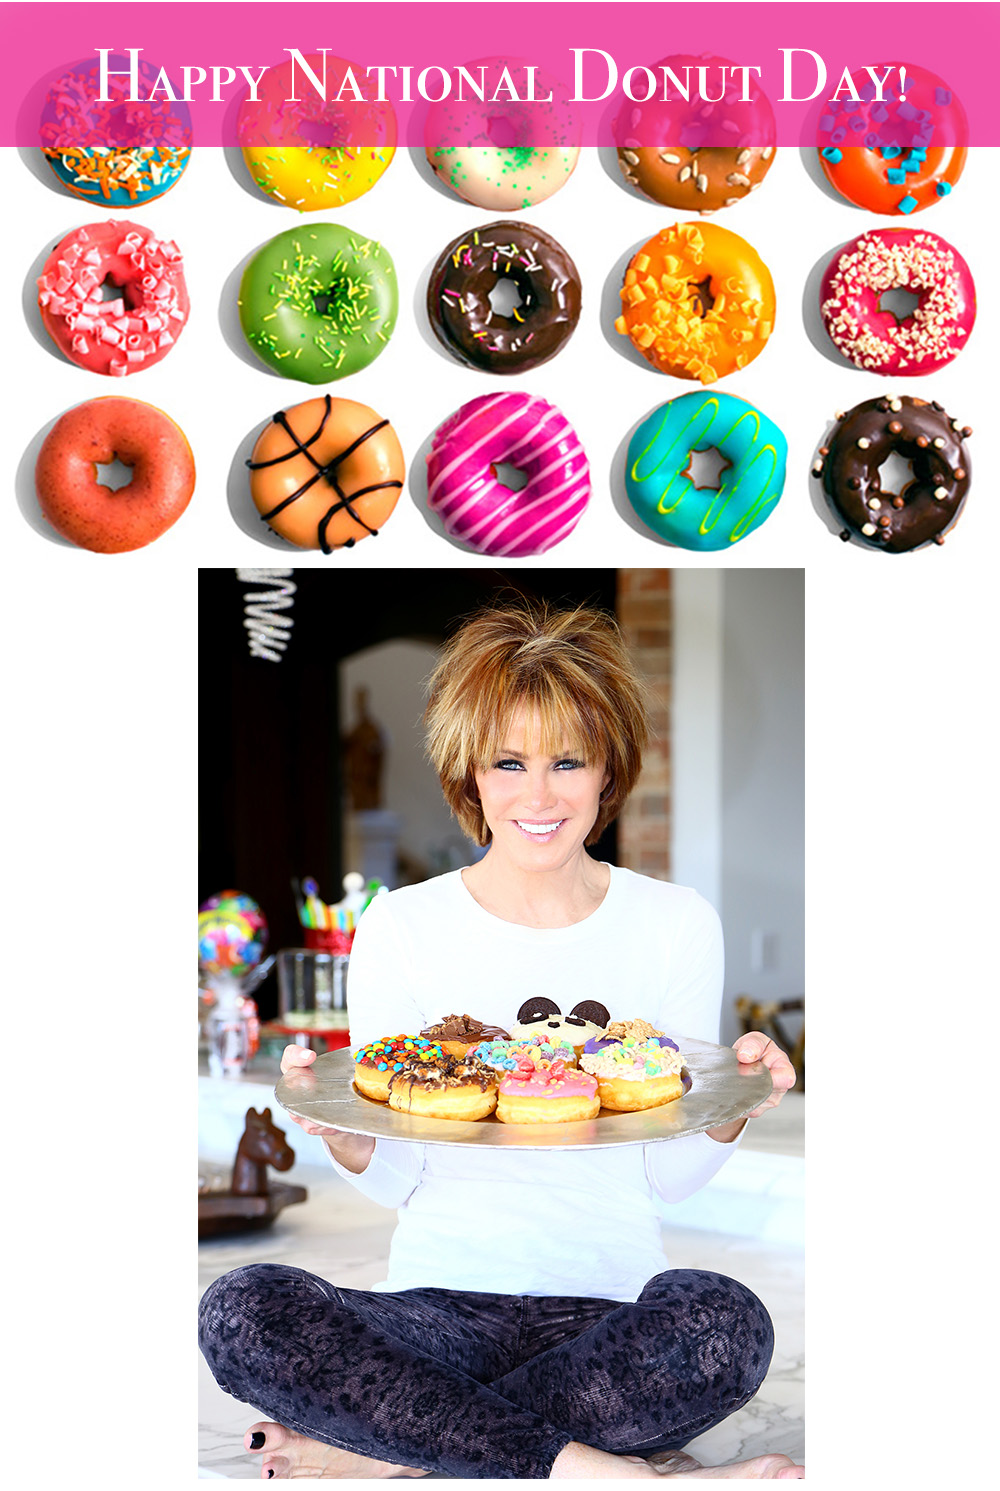 Laura-Dunn-National-Donut-Day-2015